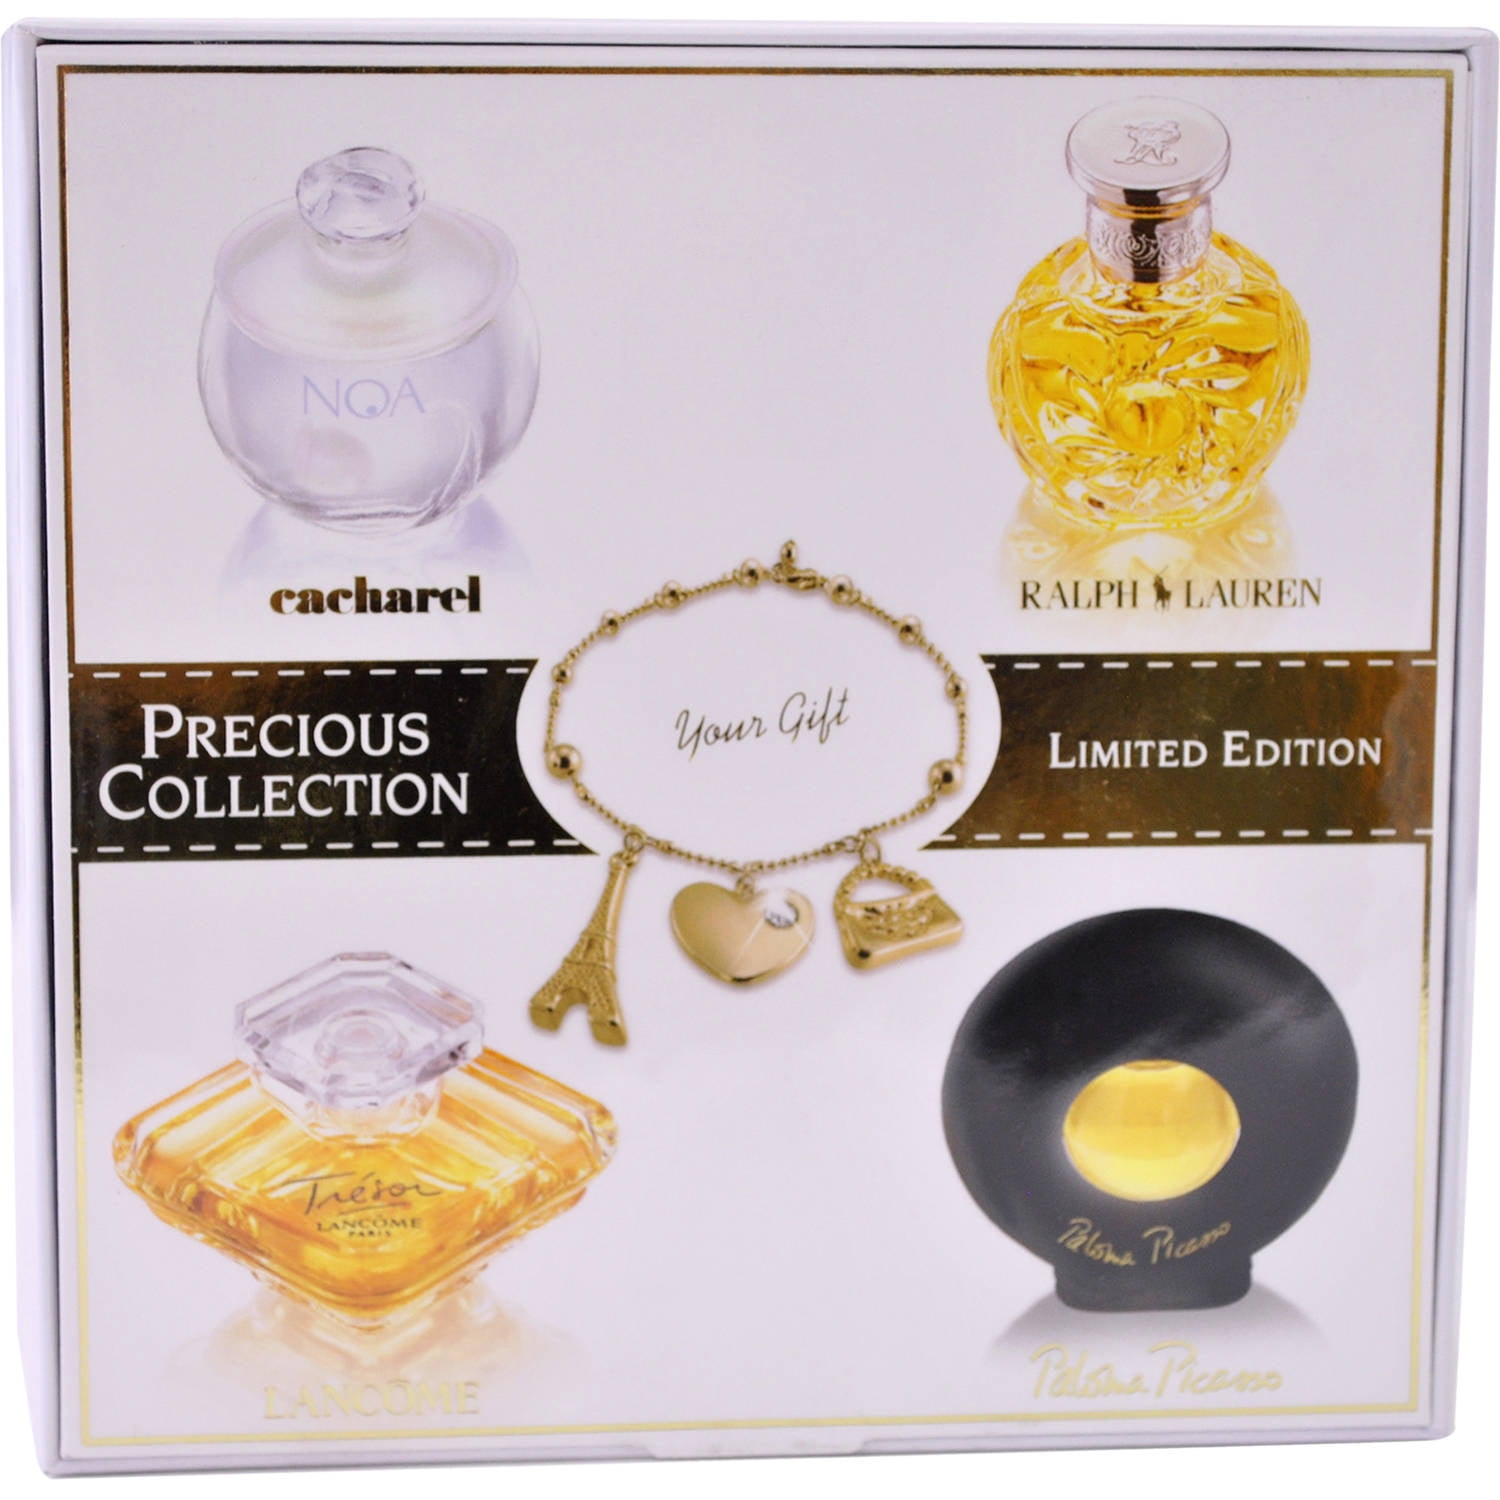 paloma picasso perfume walgreens